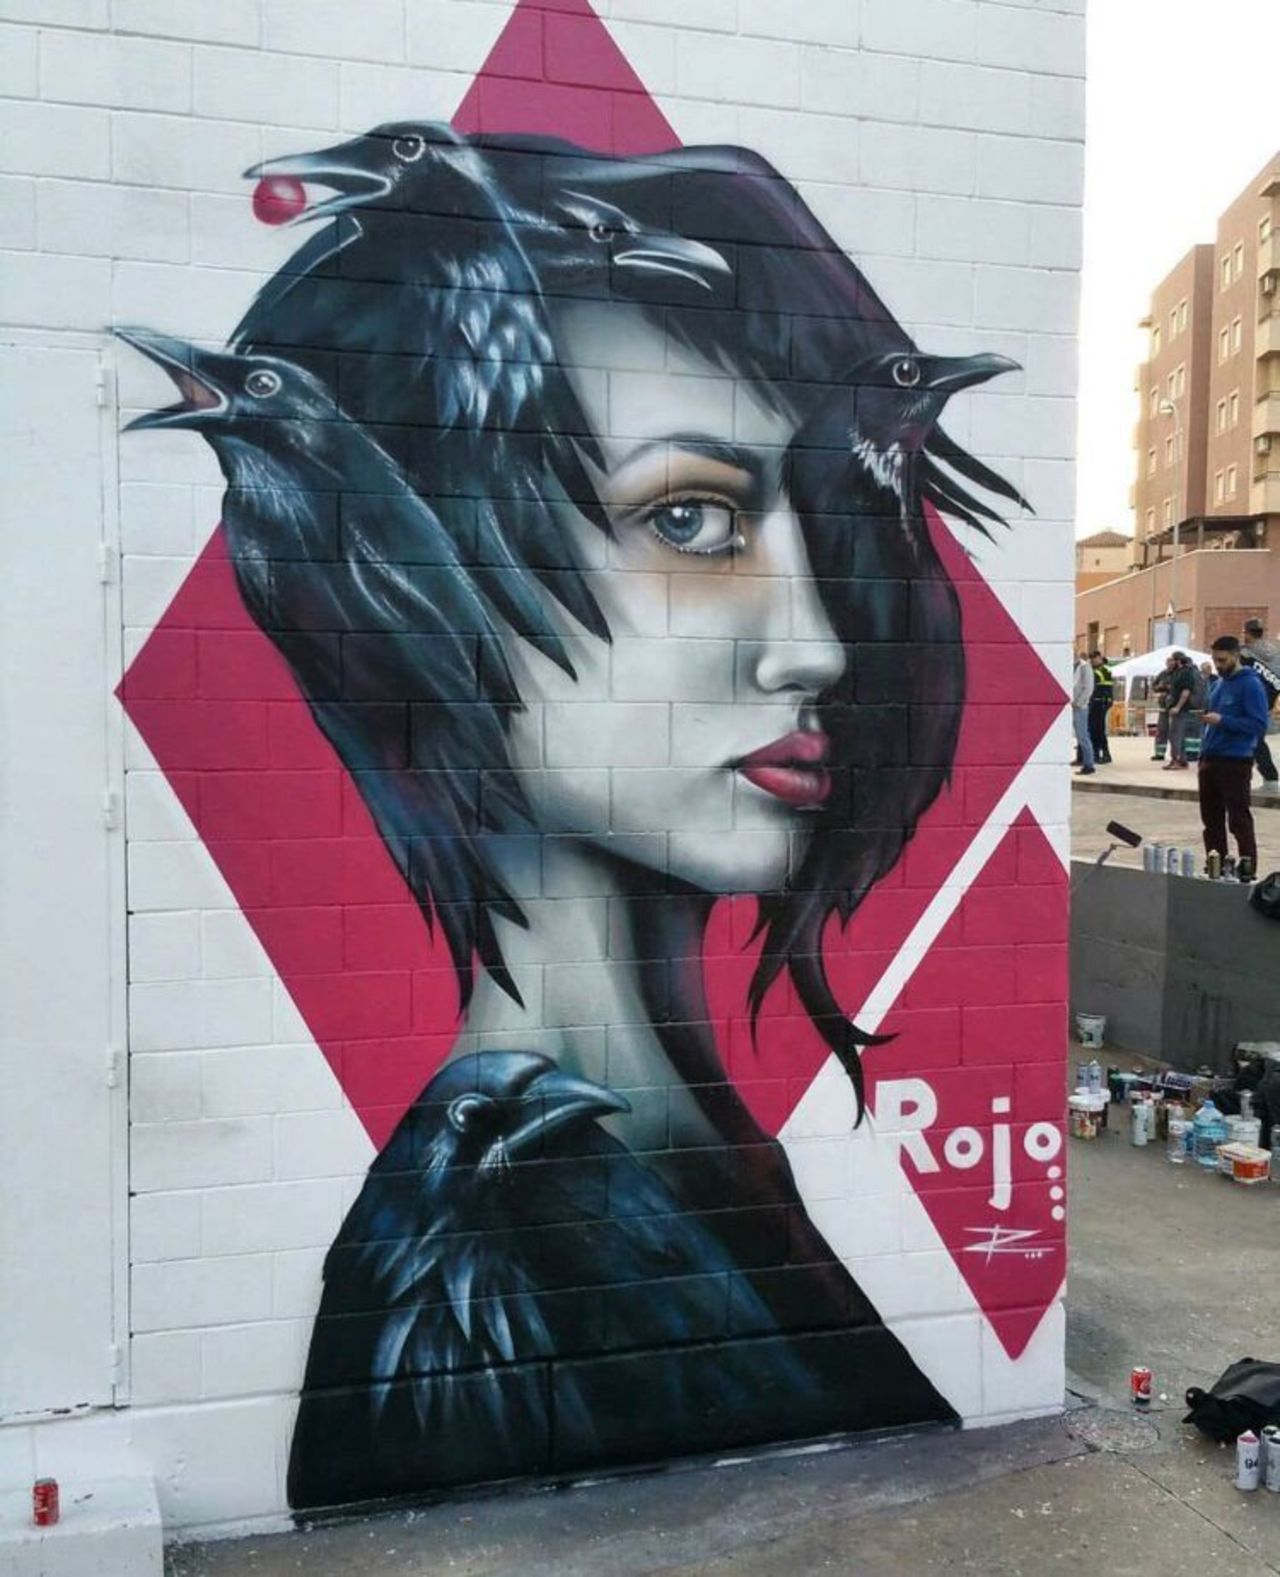 New work by Rojo #streetart #mural #graffiti #art https://t.co/VpRxsEoSue